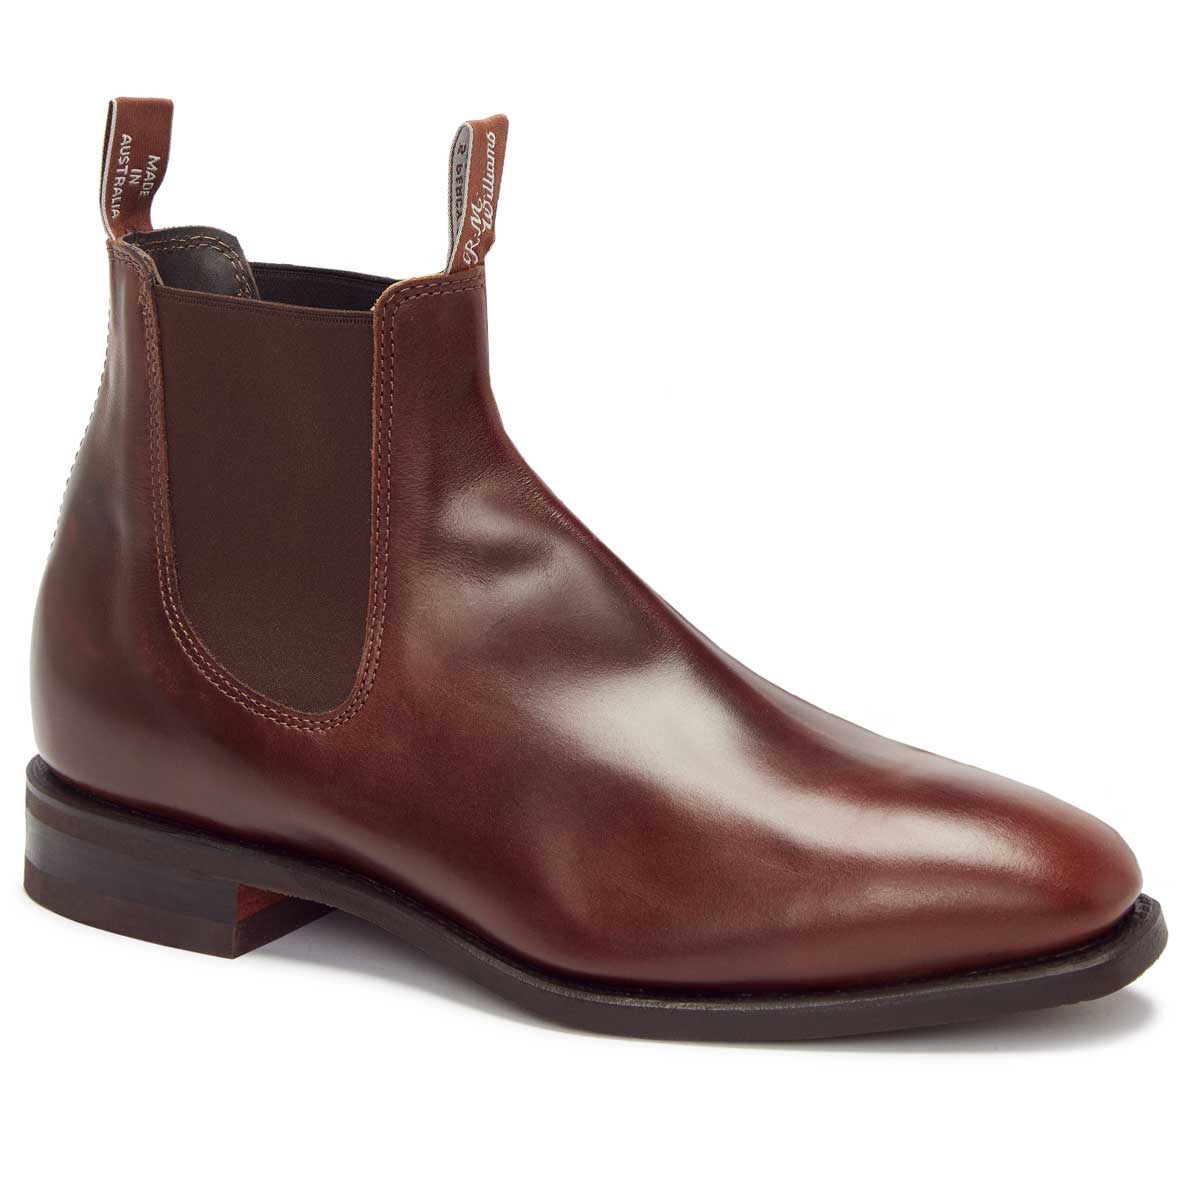 RM WILLIAMS Comfort Craftsman Boots - Men's - Mid Brown